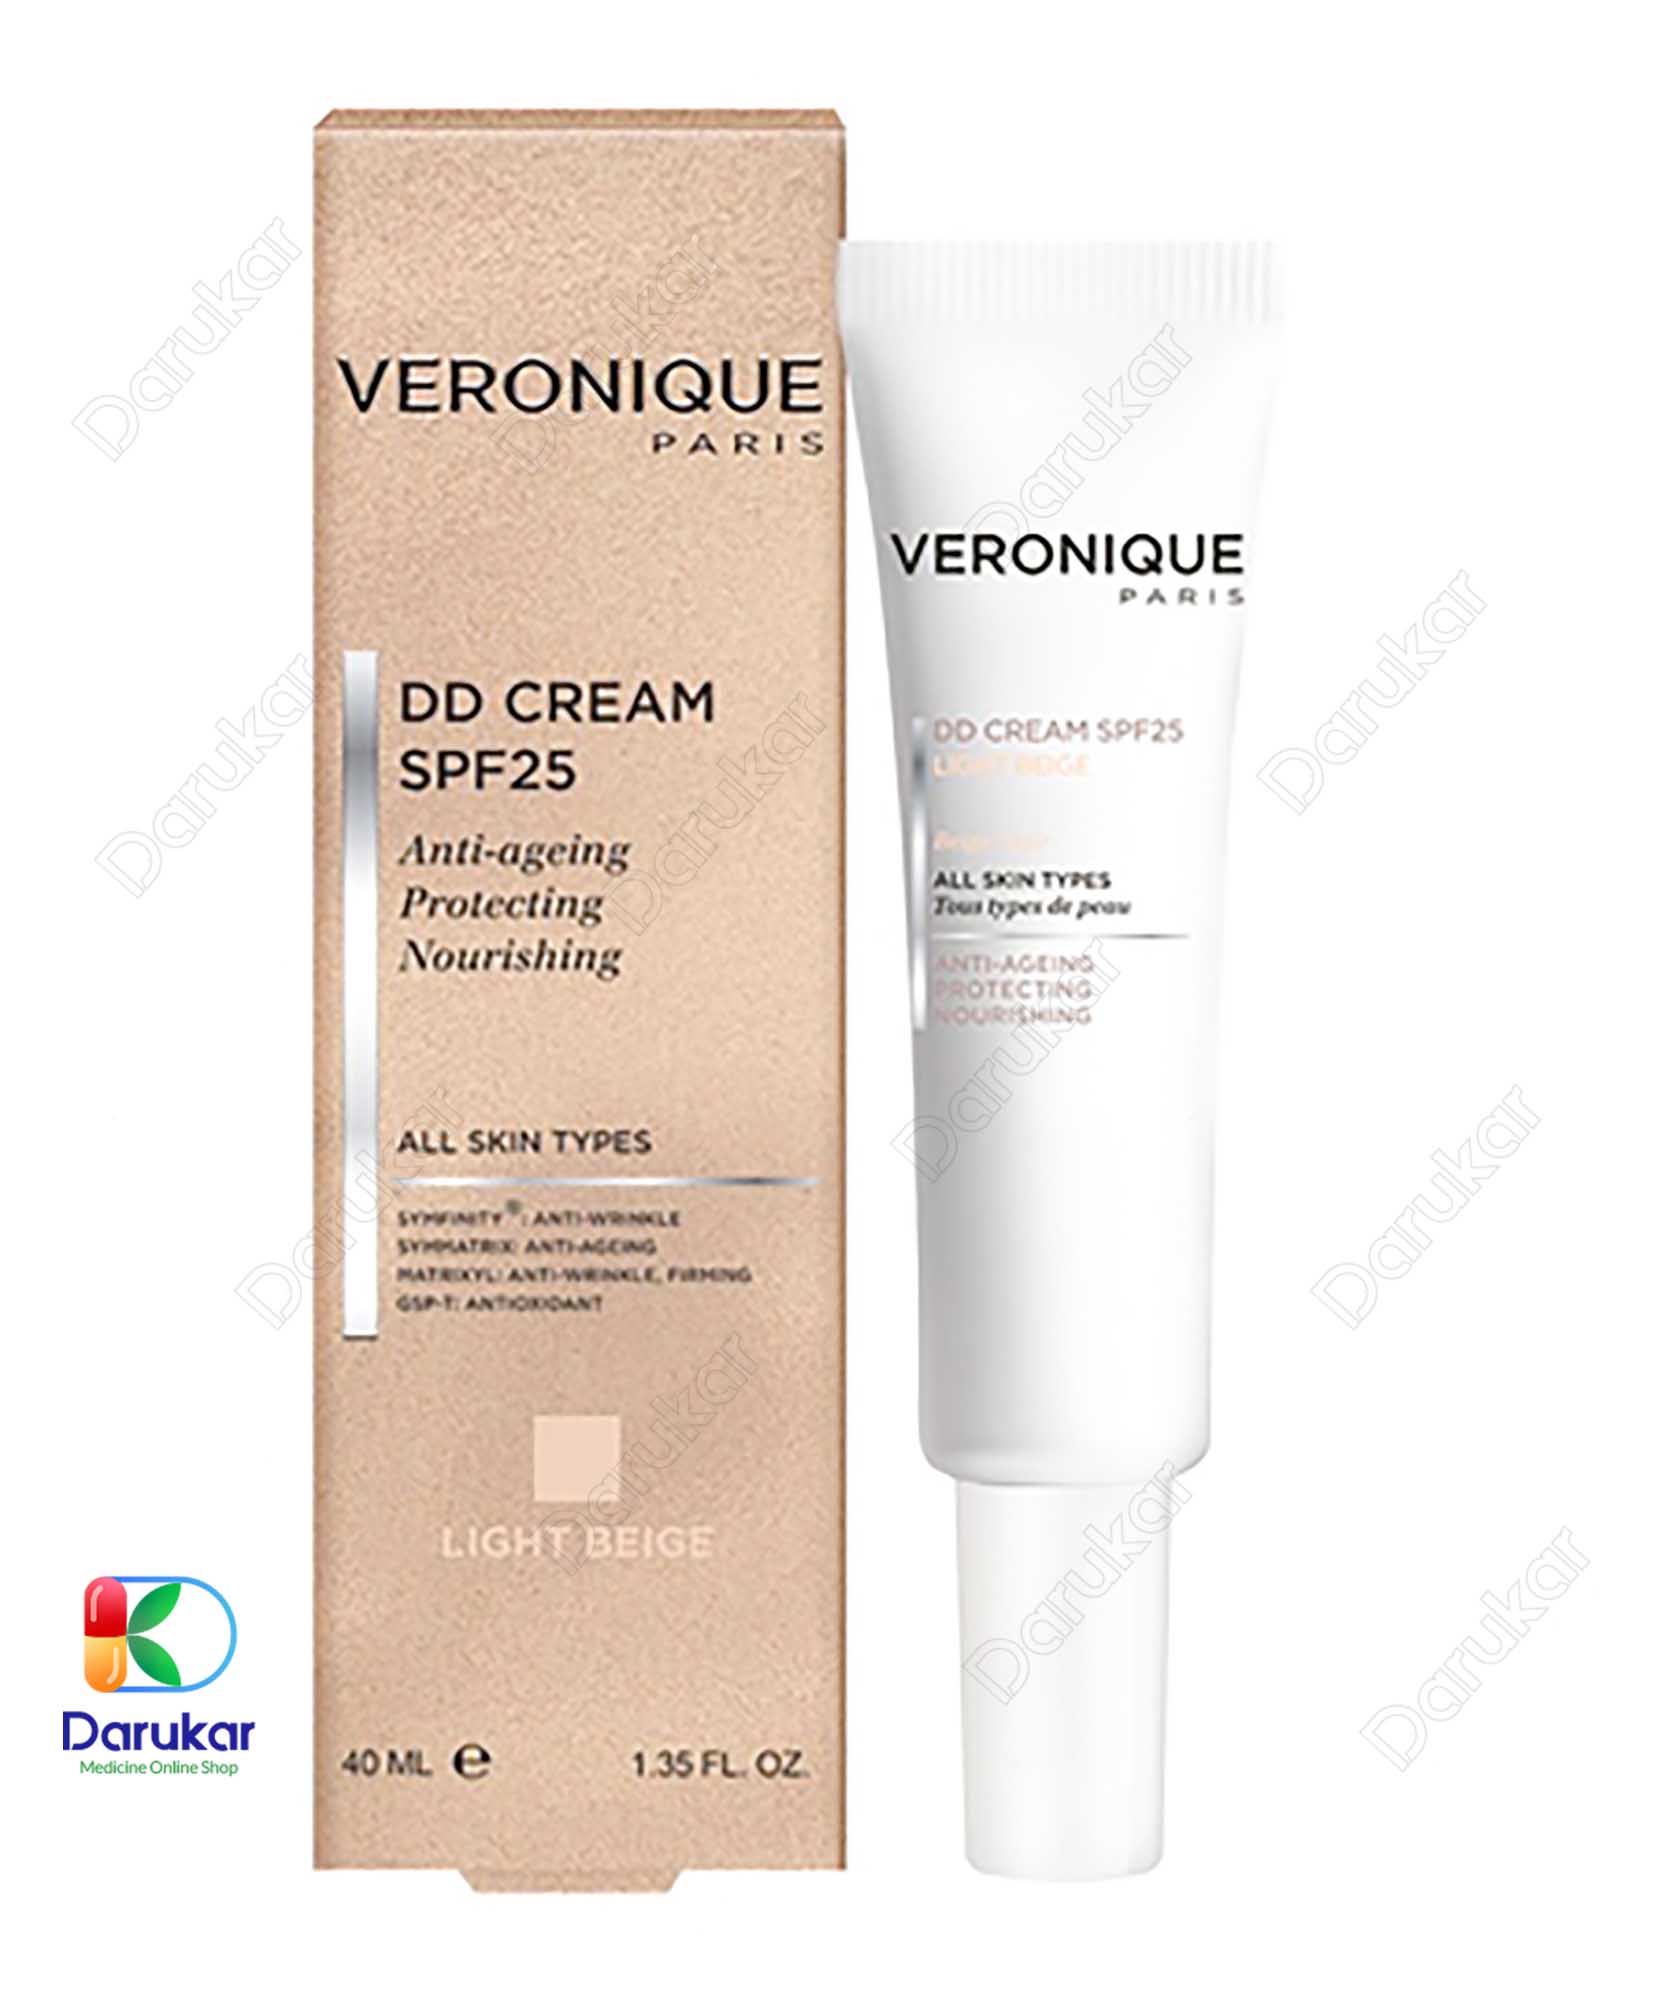 Veronique DD Cream SPF25 40 ml 2